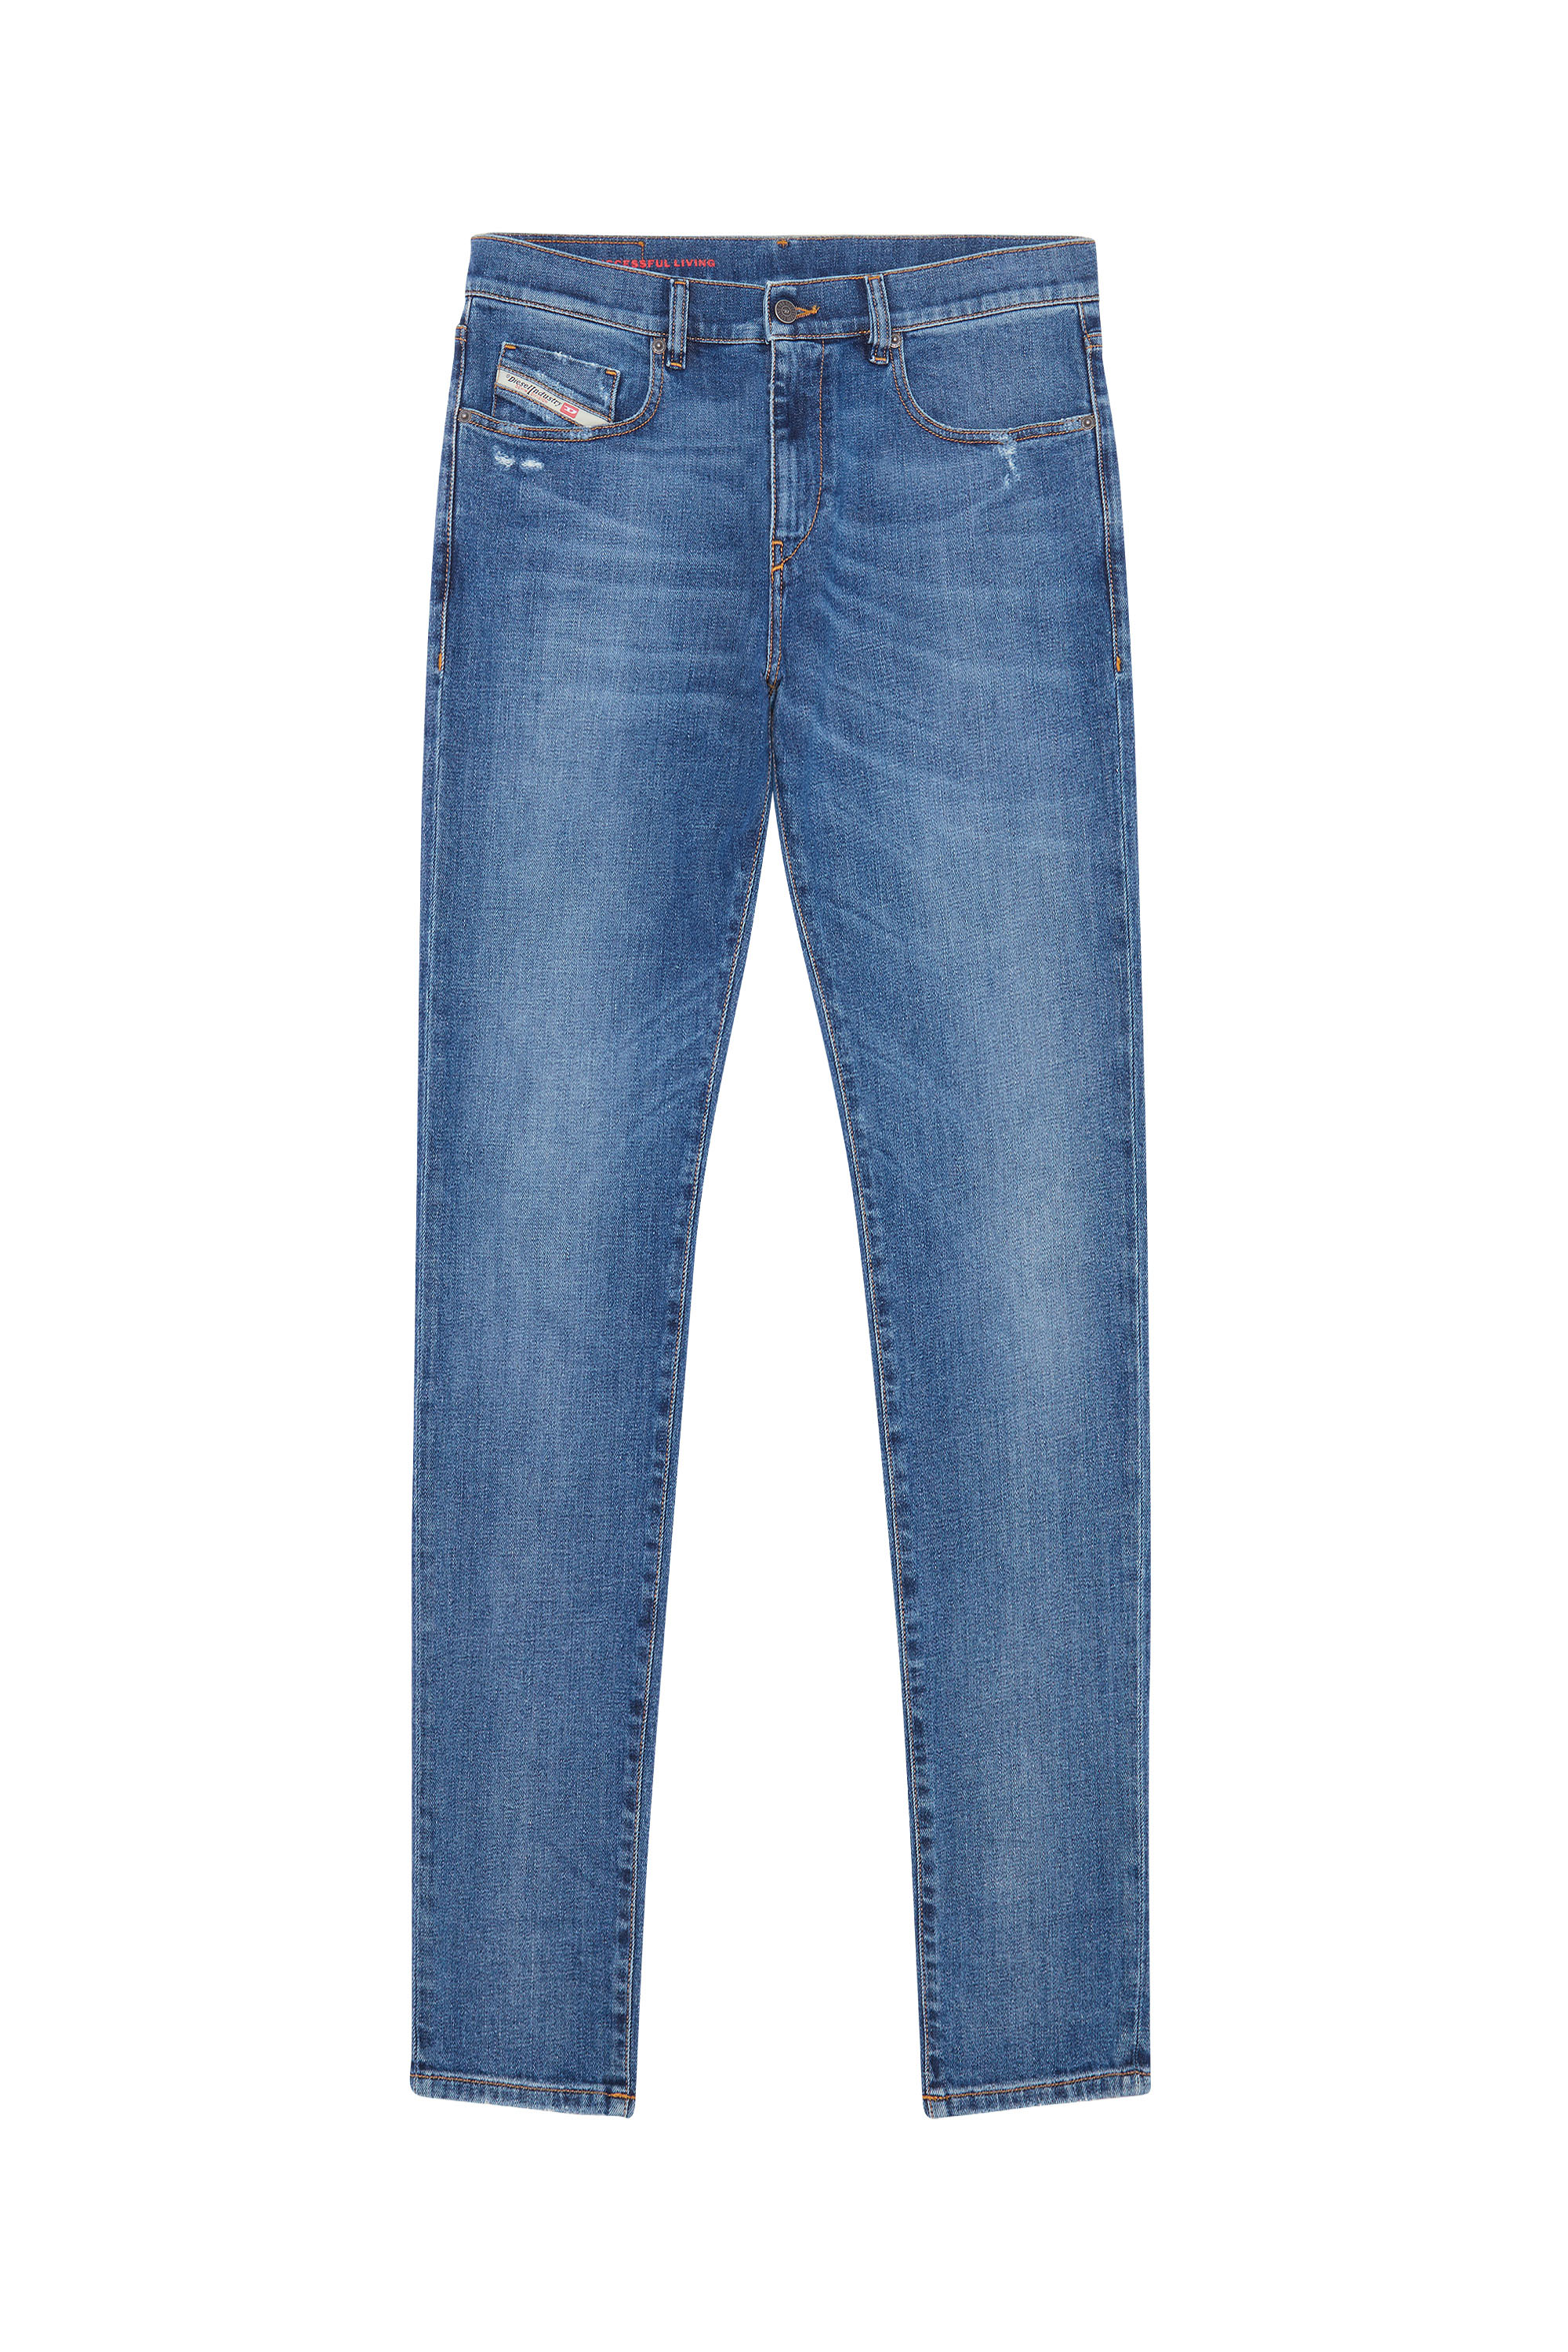 2019 D-STRUKT 09E44 Slim Jeans, Medium blue - Jeans